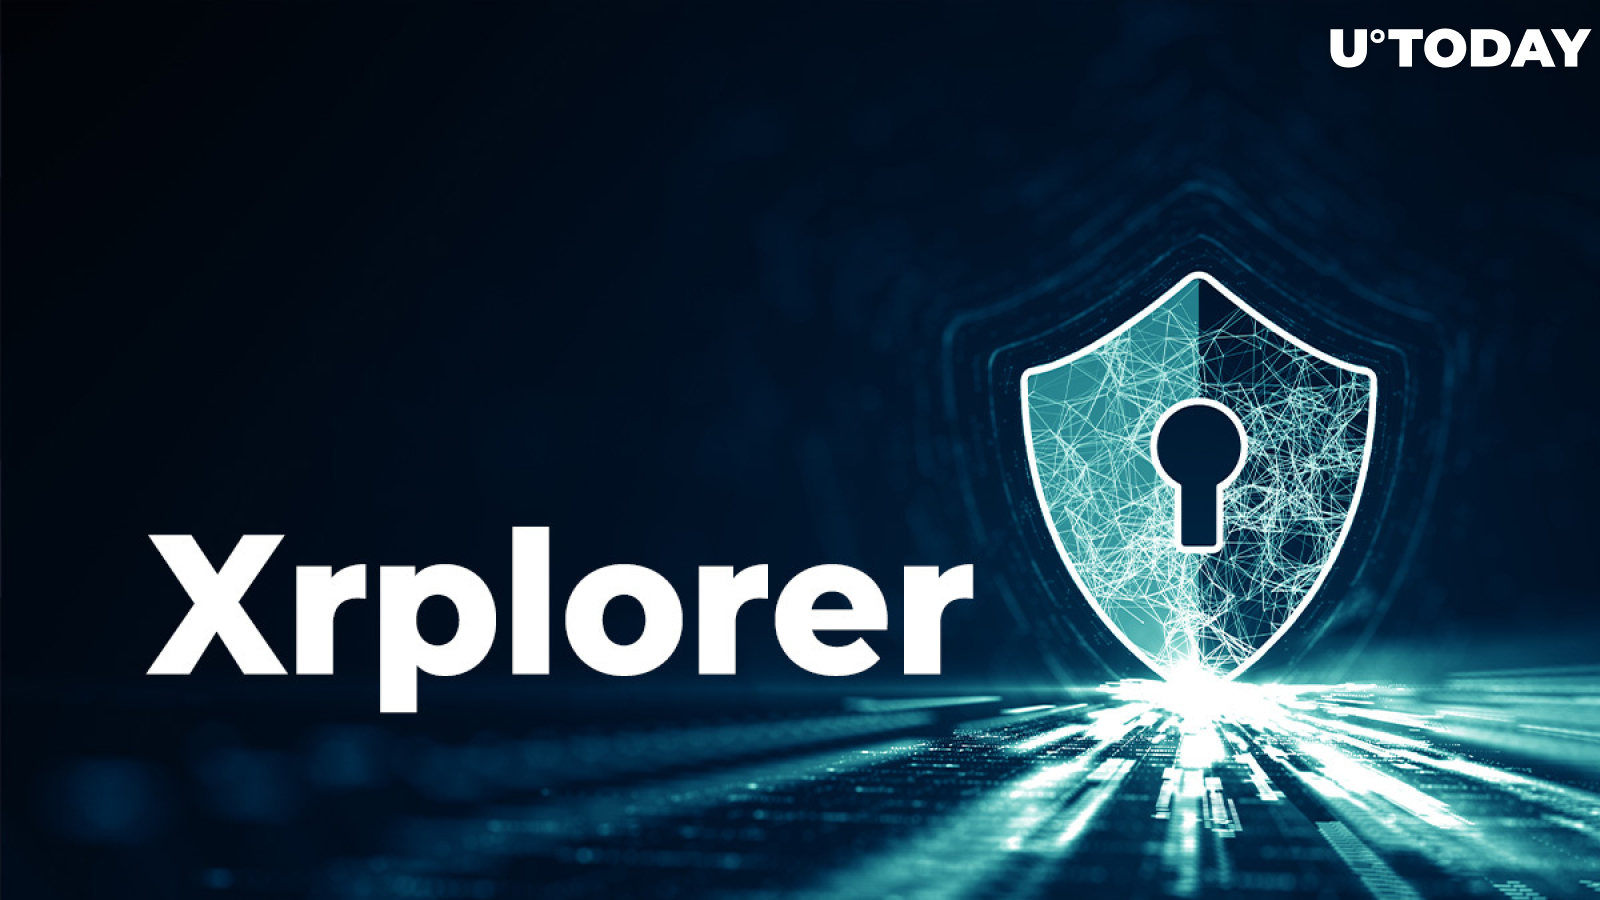 XRP Explorer Instrument Xrplorer to Power GateHub's Security Solution